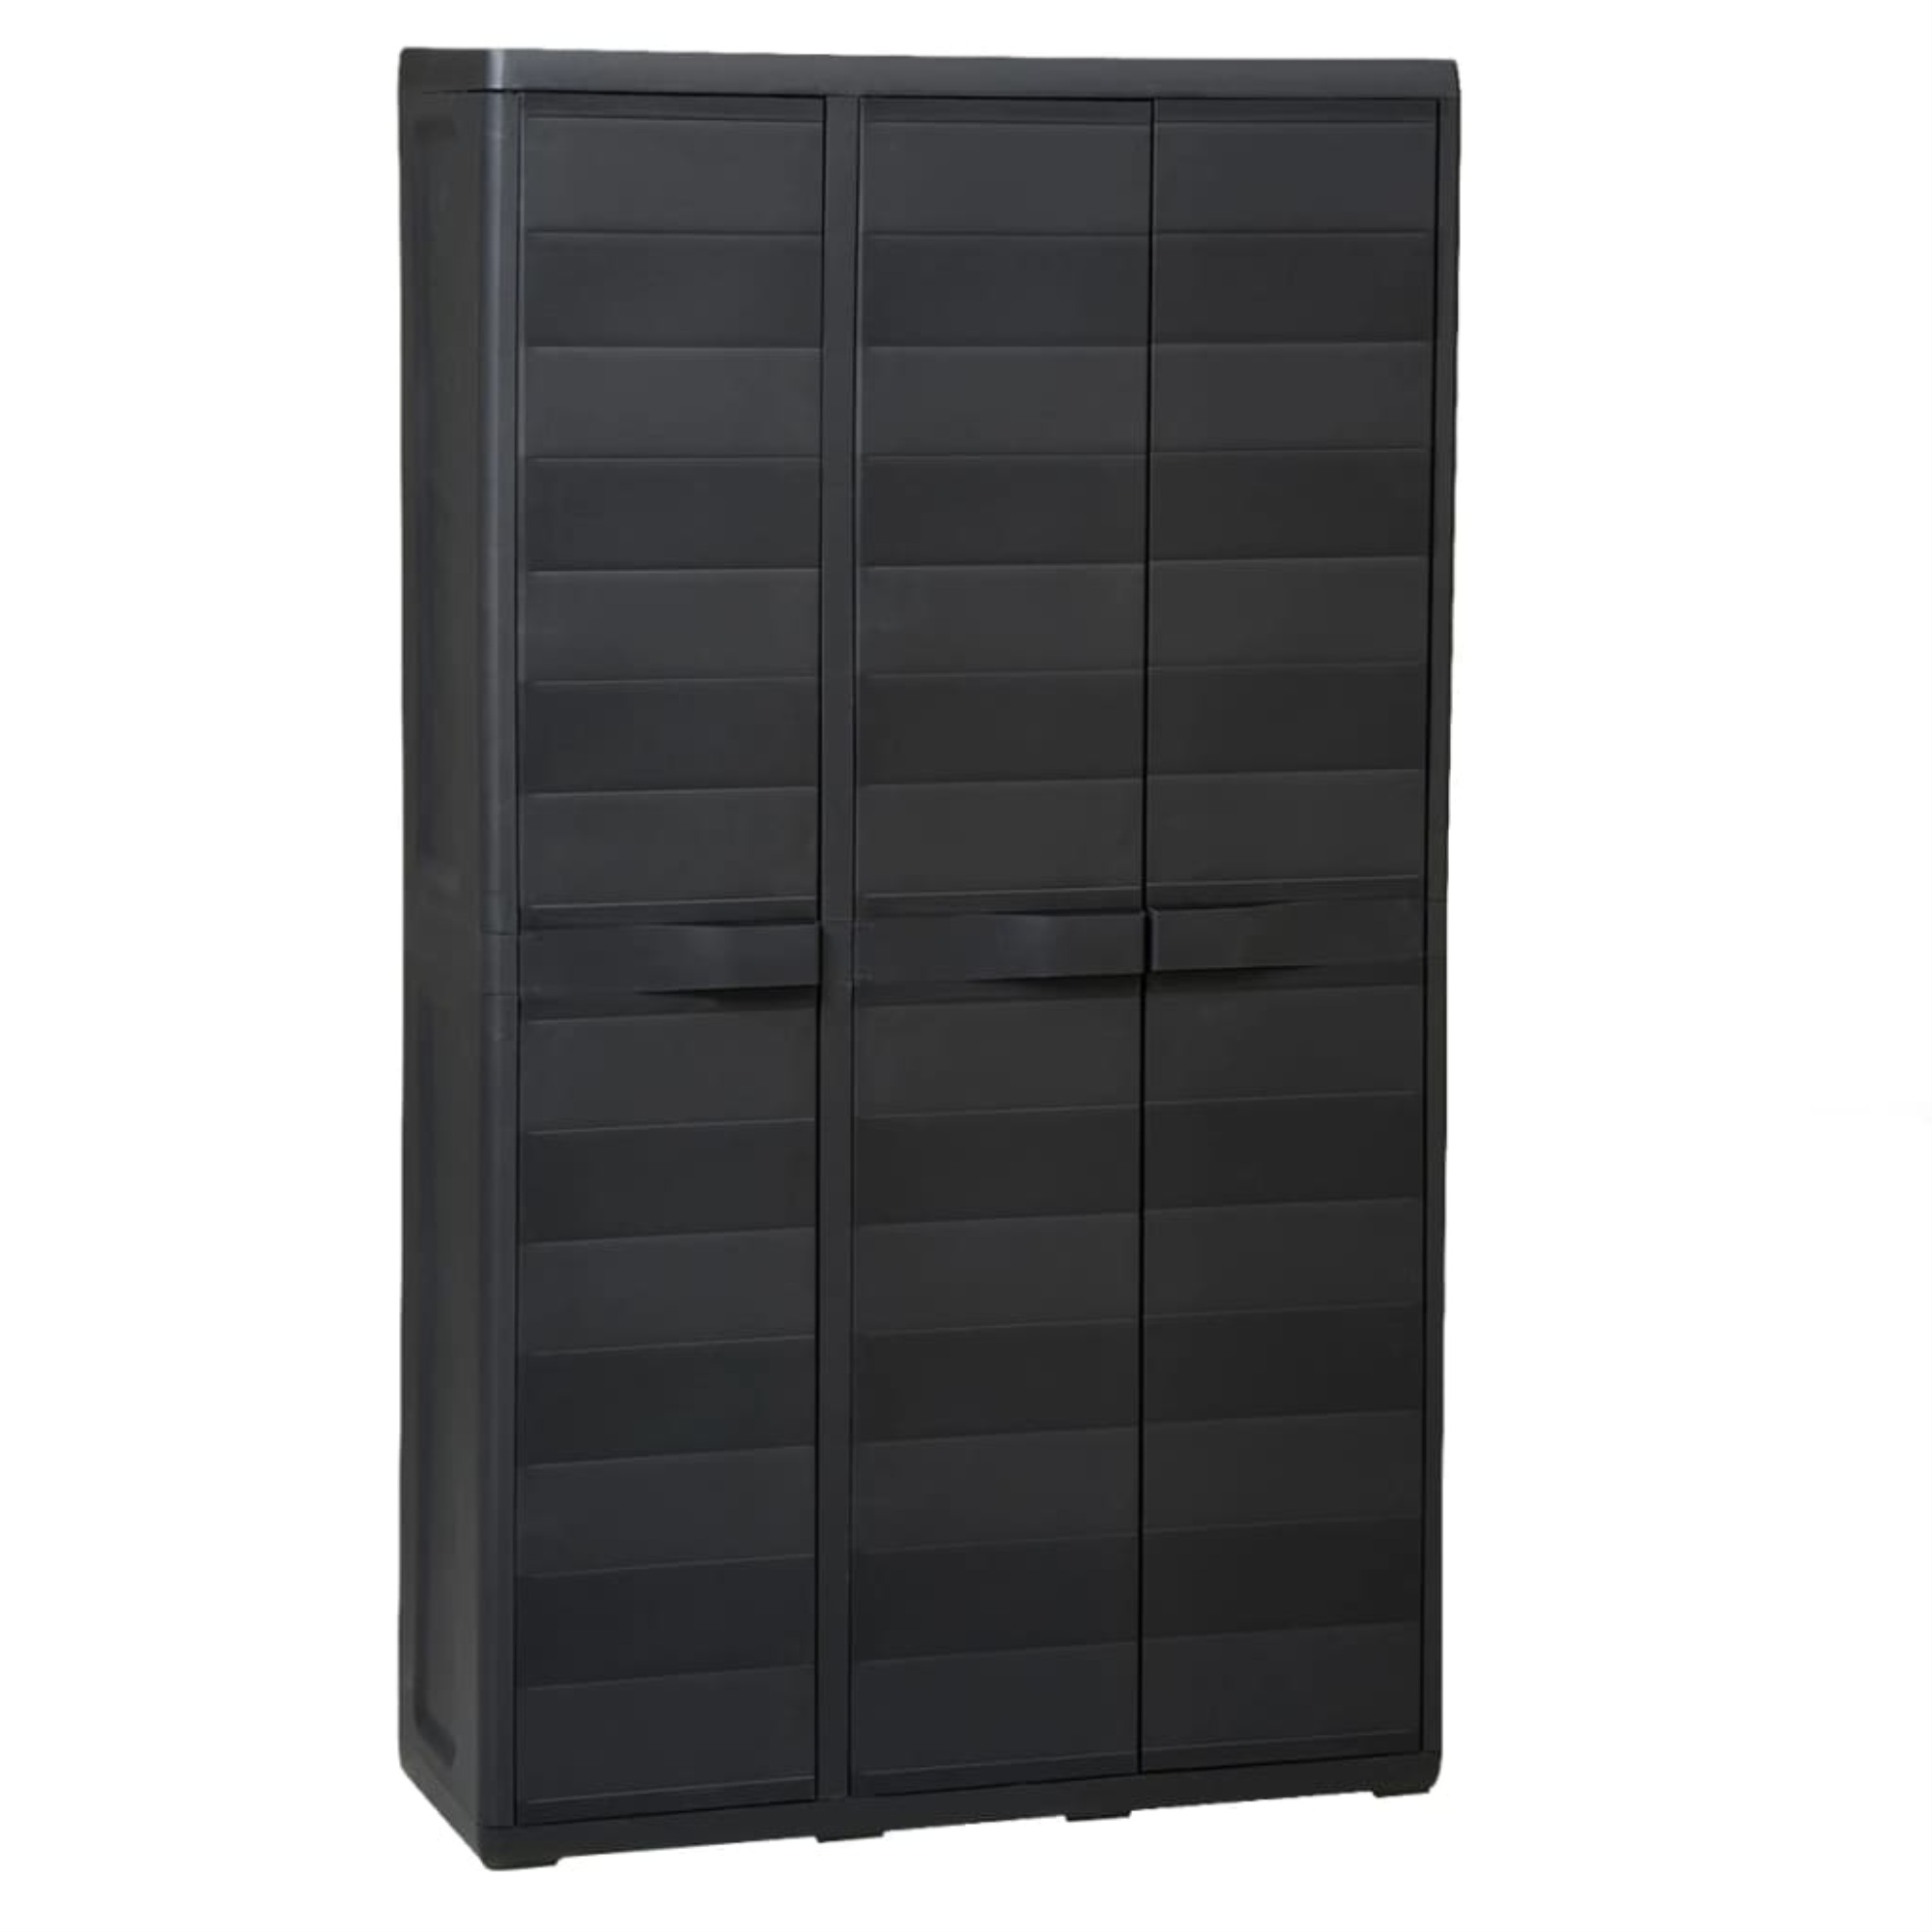 Tidyard Garden Storage Cabinet with 1 Shelf 2 Door Tool Storage Black and Grey 65 x 38 x 87 cm 